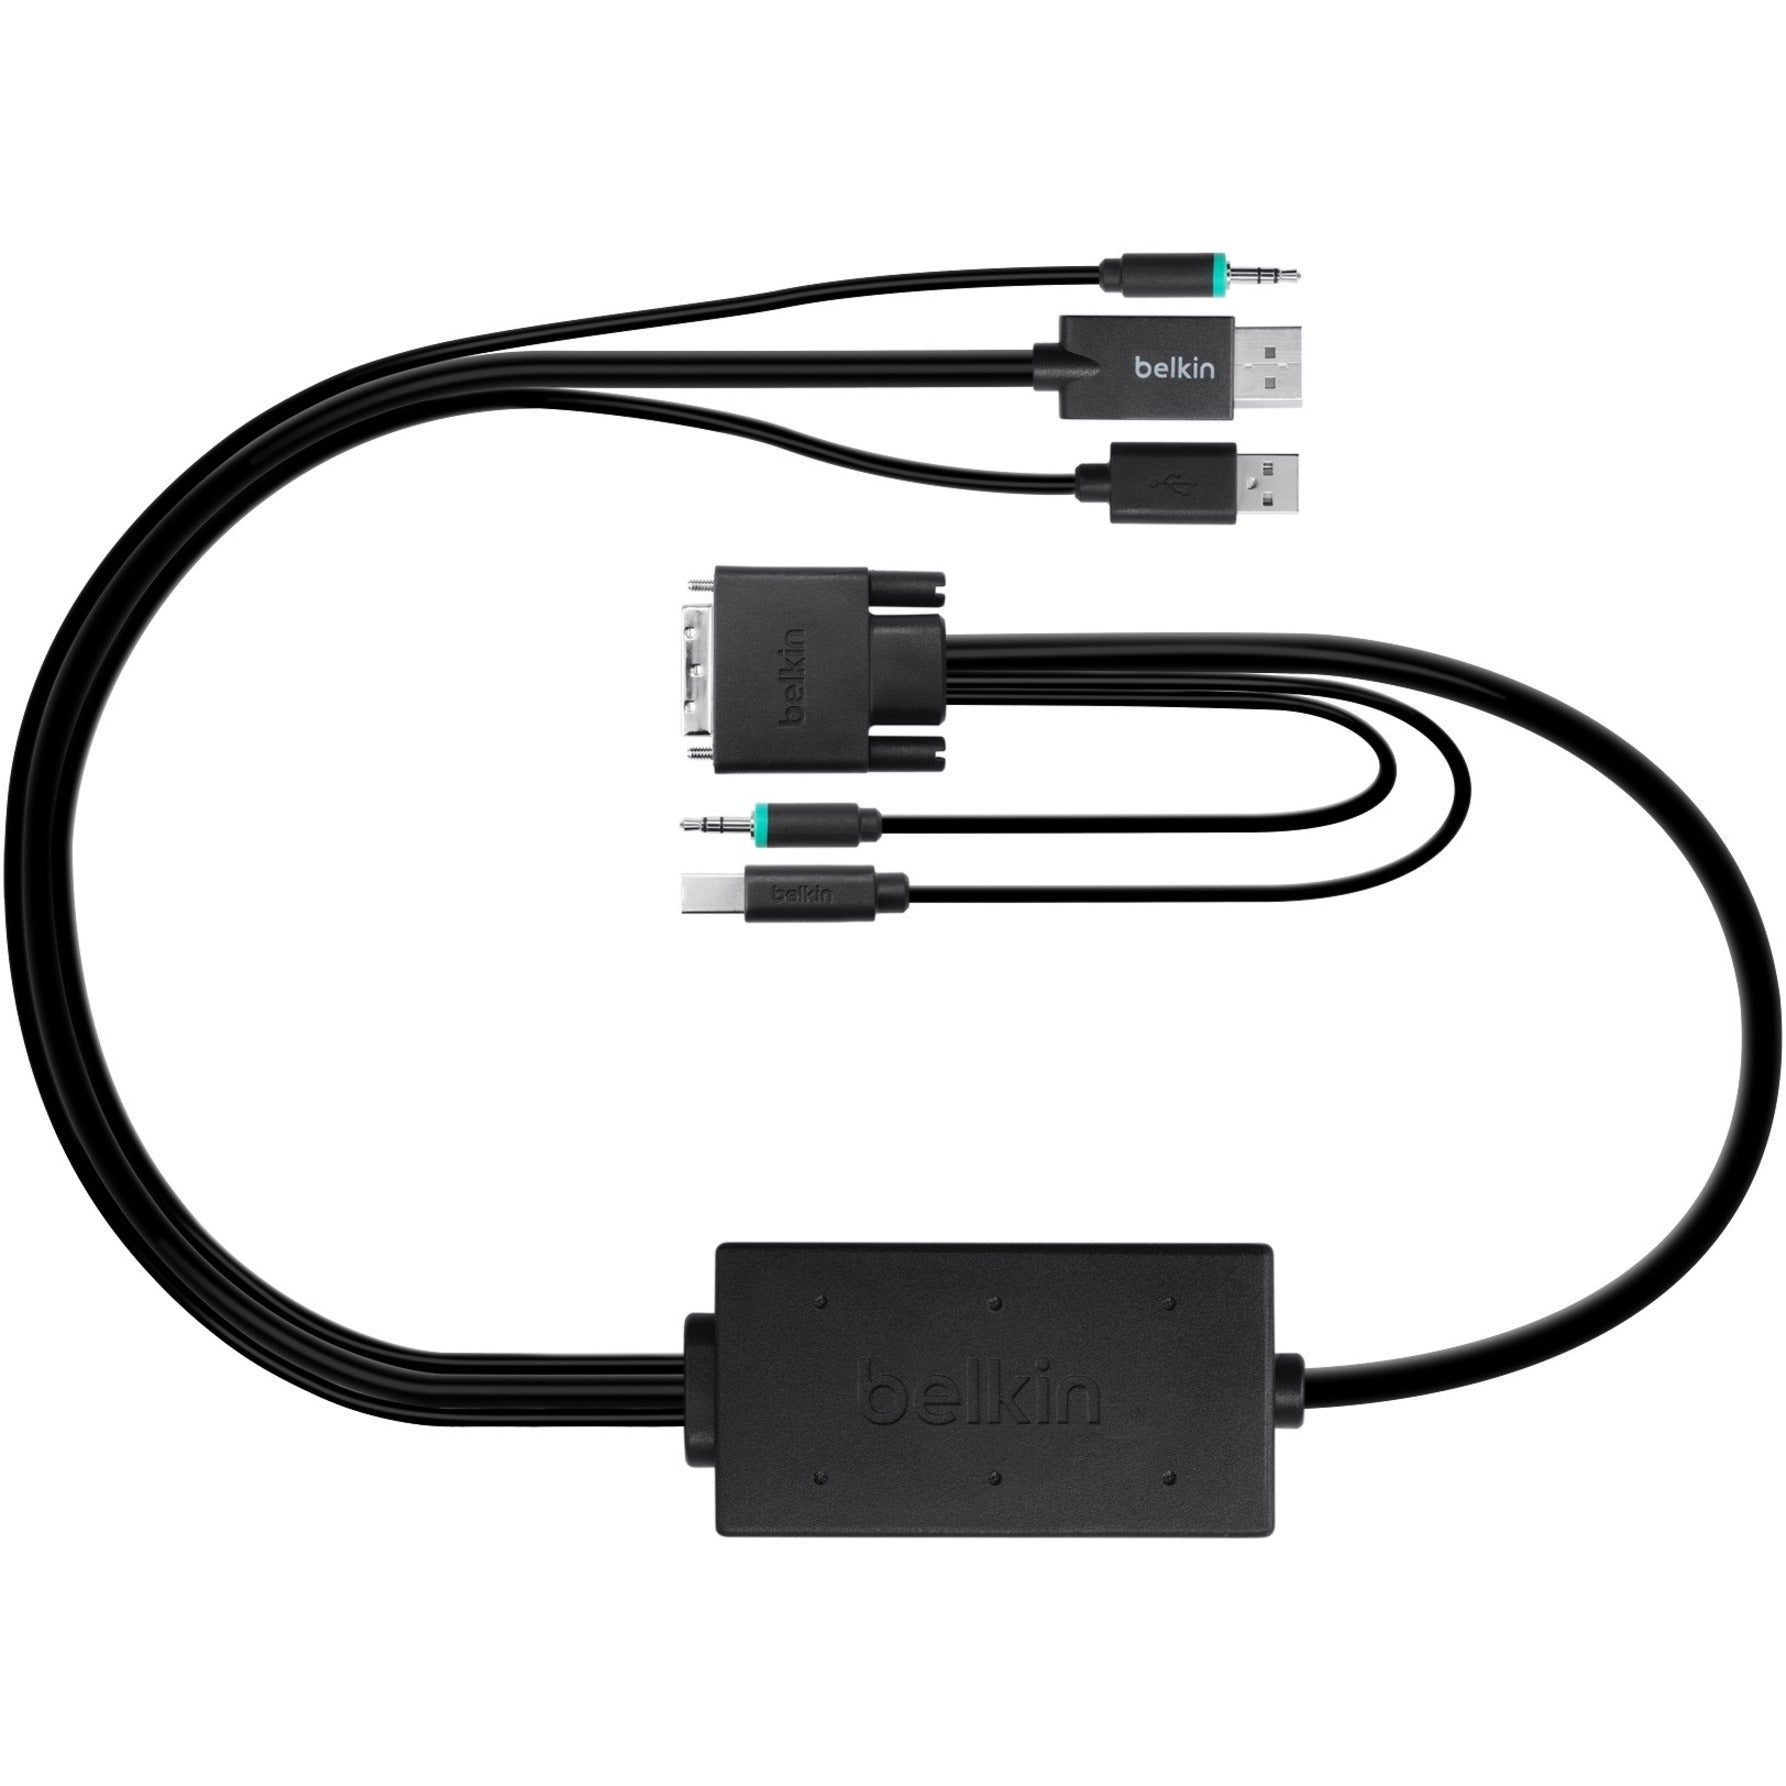 Belkin F1D9017B06 DisplayPort/DVI KVM Cable, 6 ft, Copper Conductor